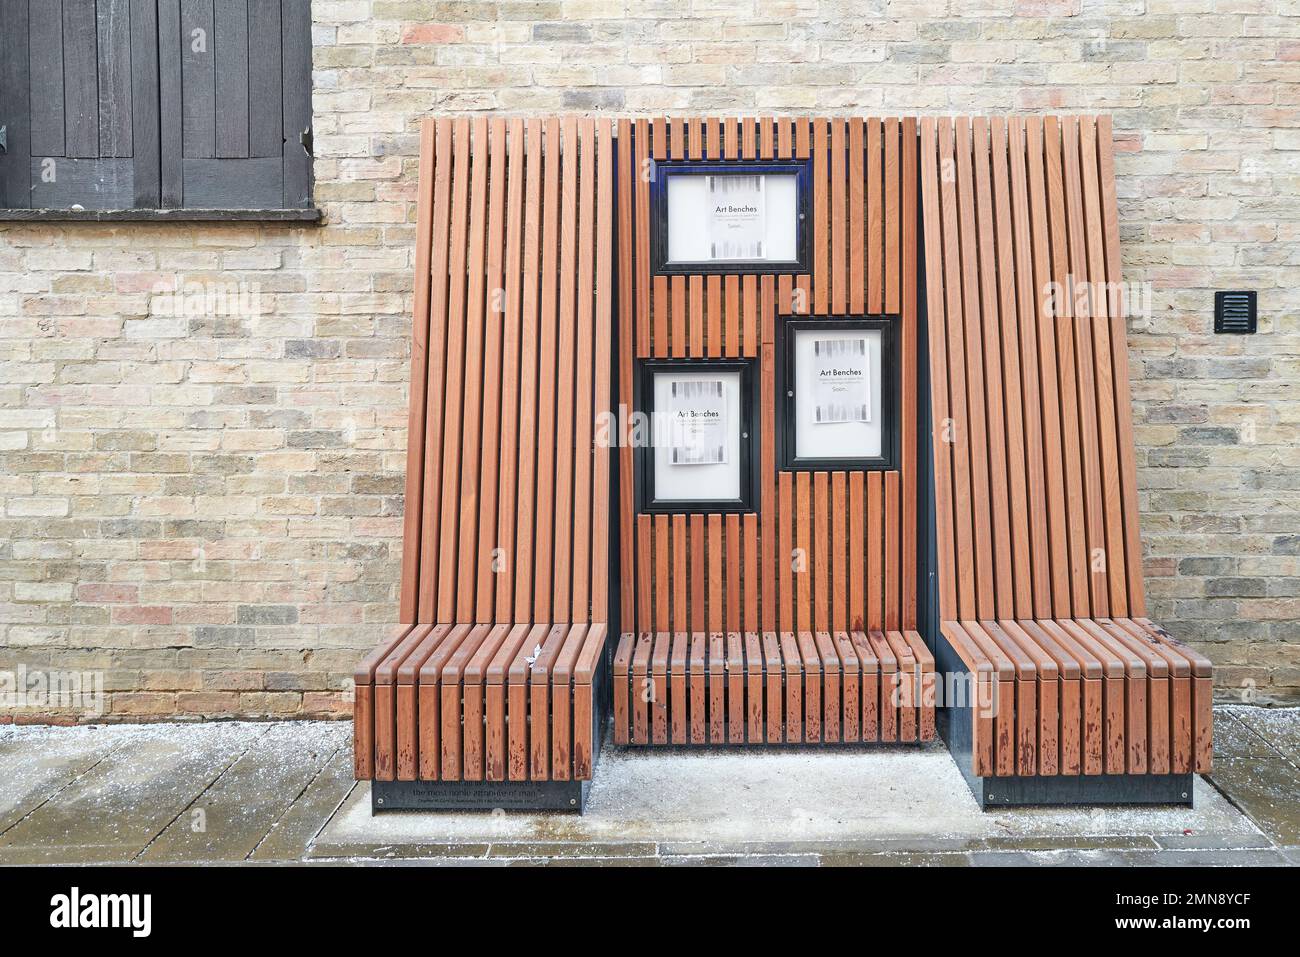 Art bench on a pavement at Cambrridge, England. Stock Photo